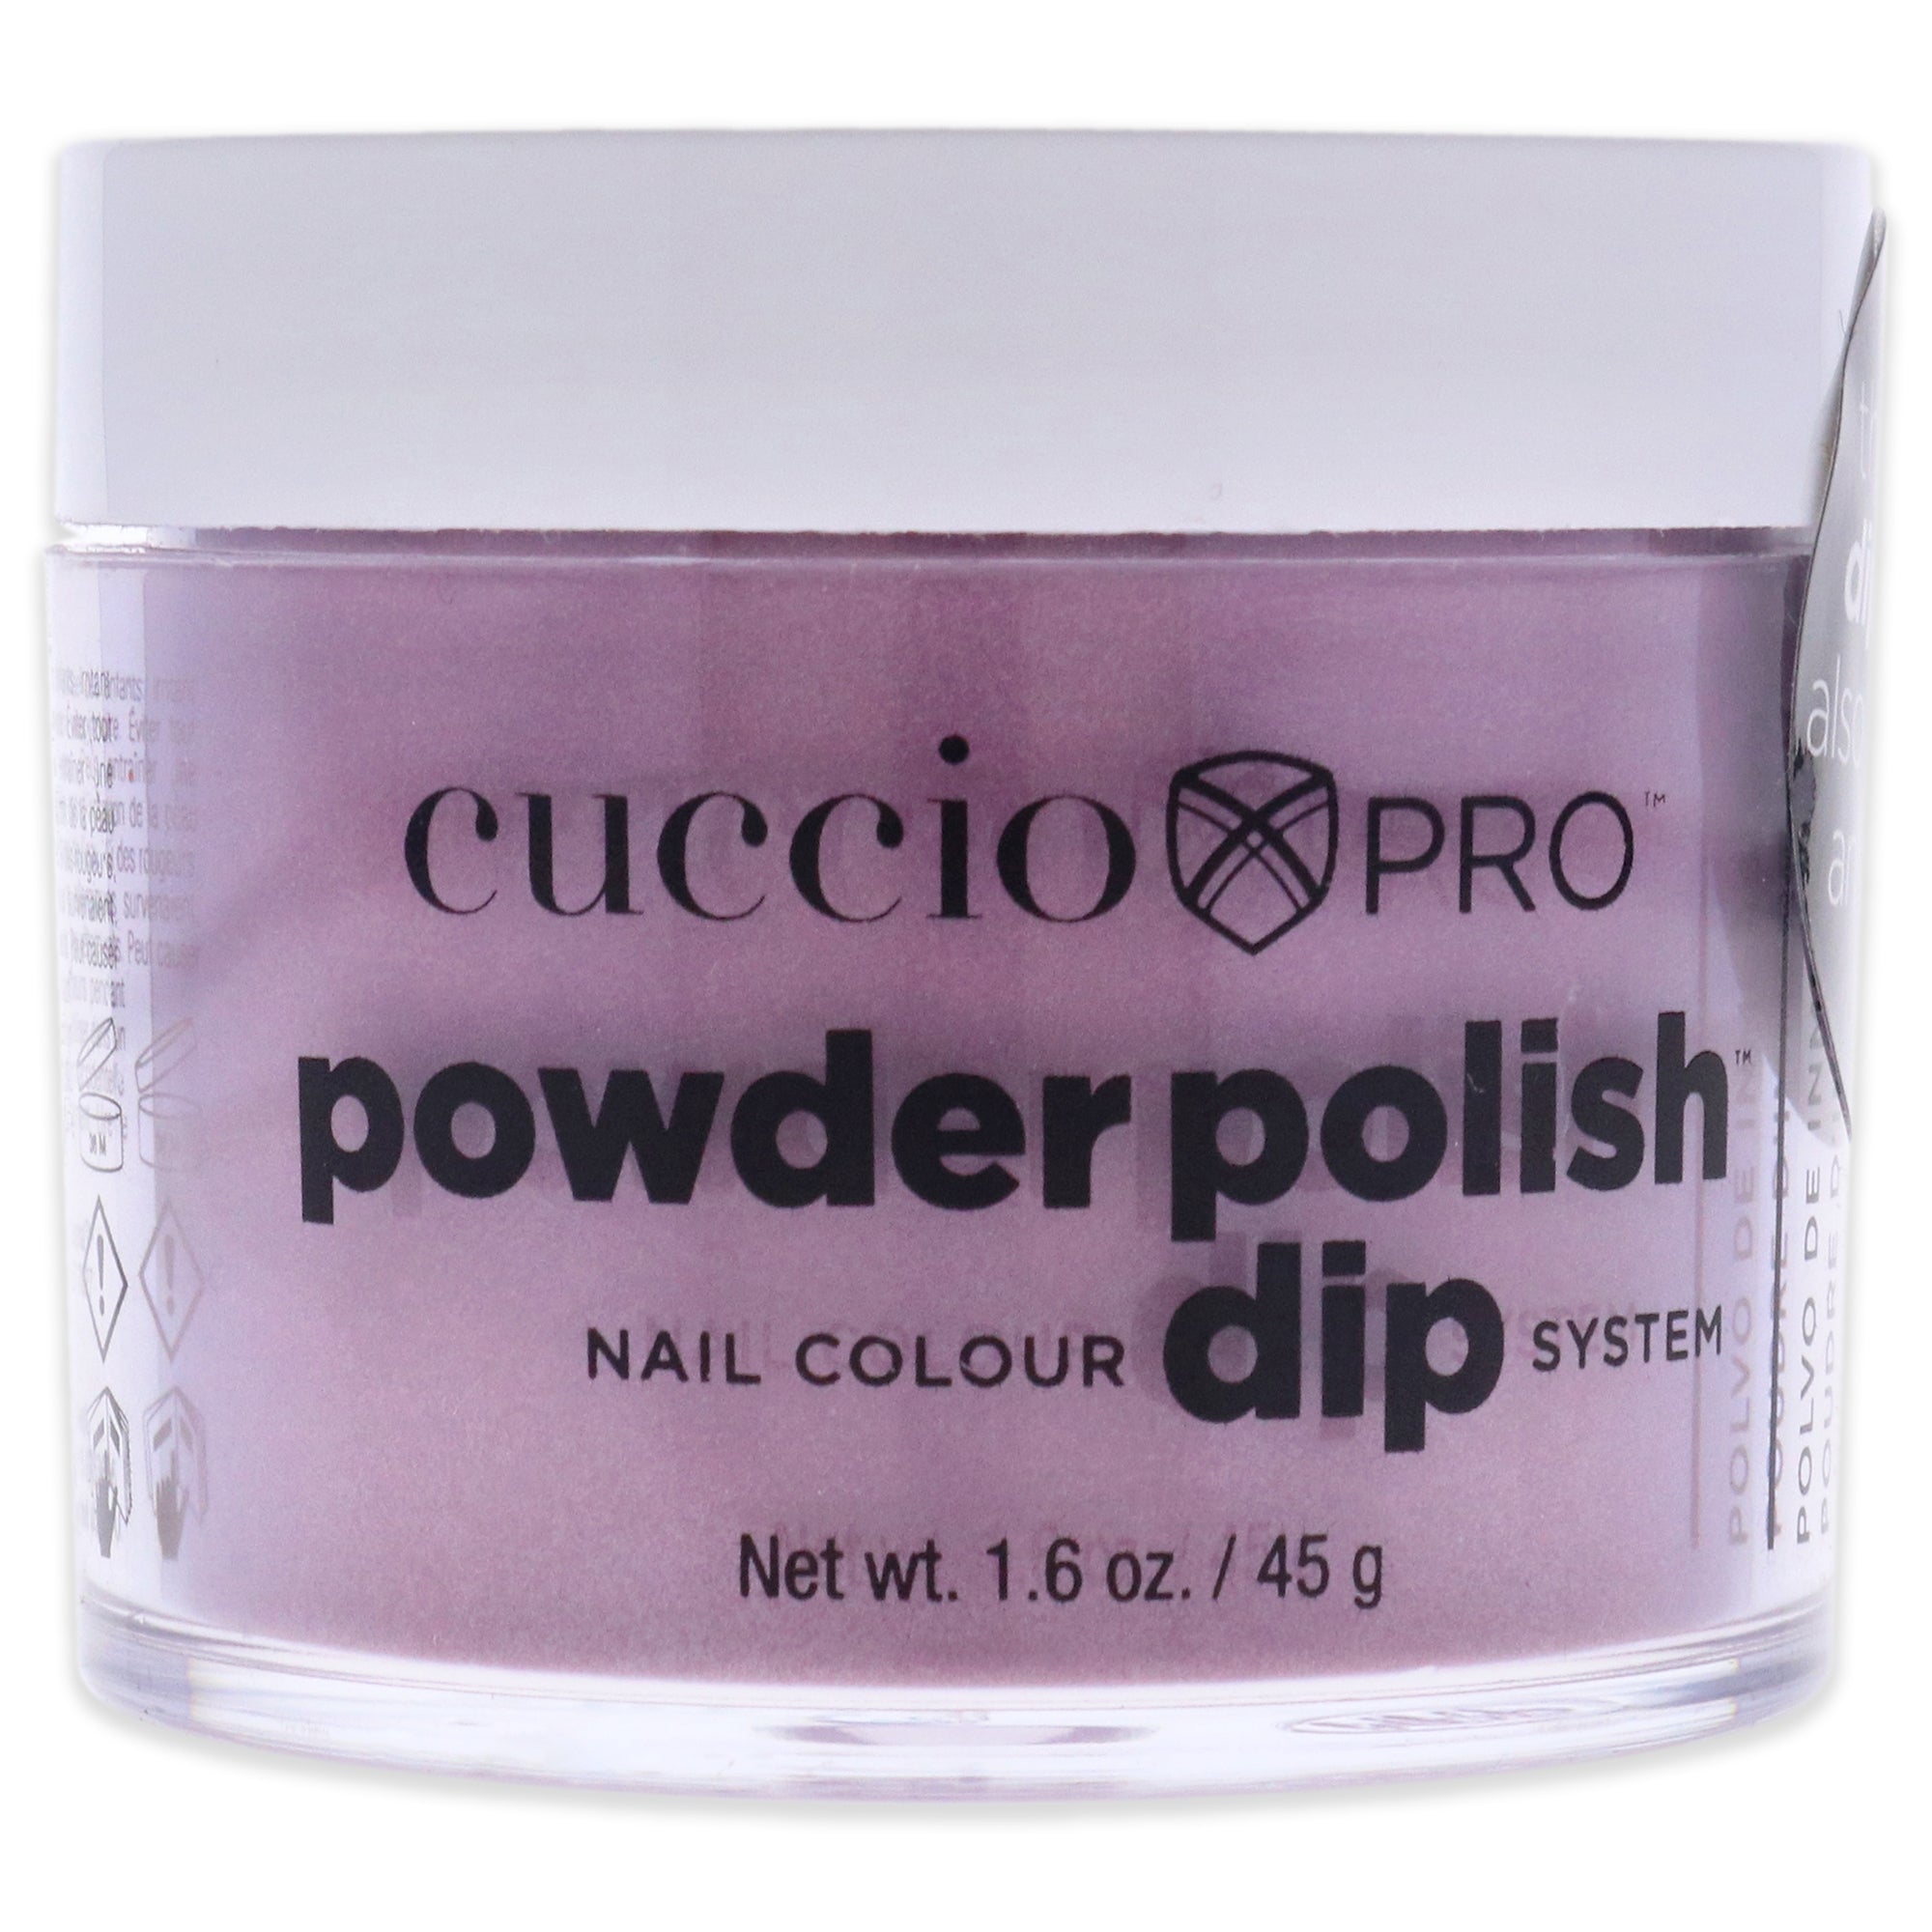 Pro Powder Polish Nail Colour Dip System - I Crave by Cuccio Colour for Women - 1.6 oz Nail Powder